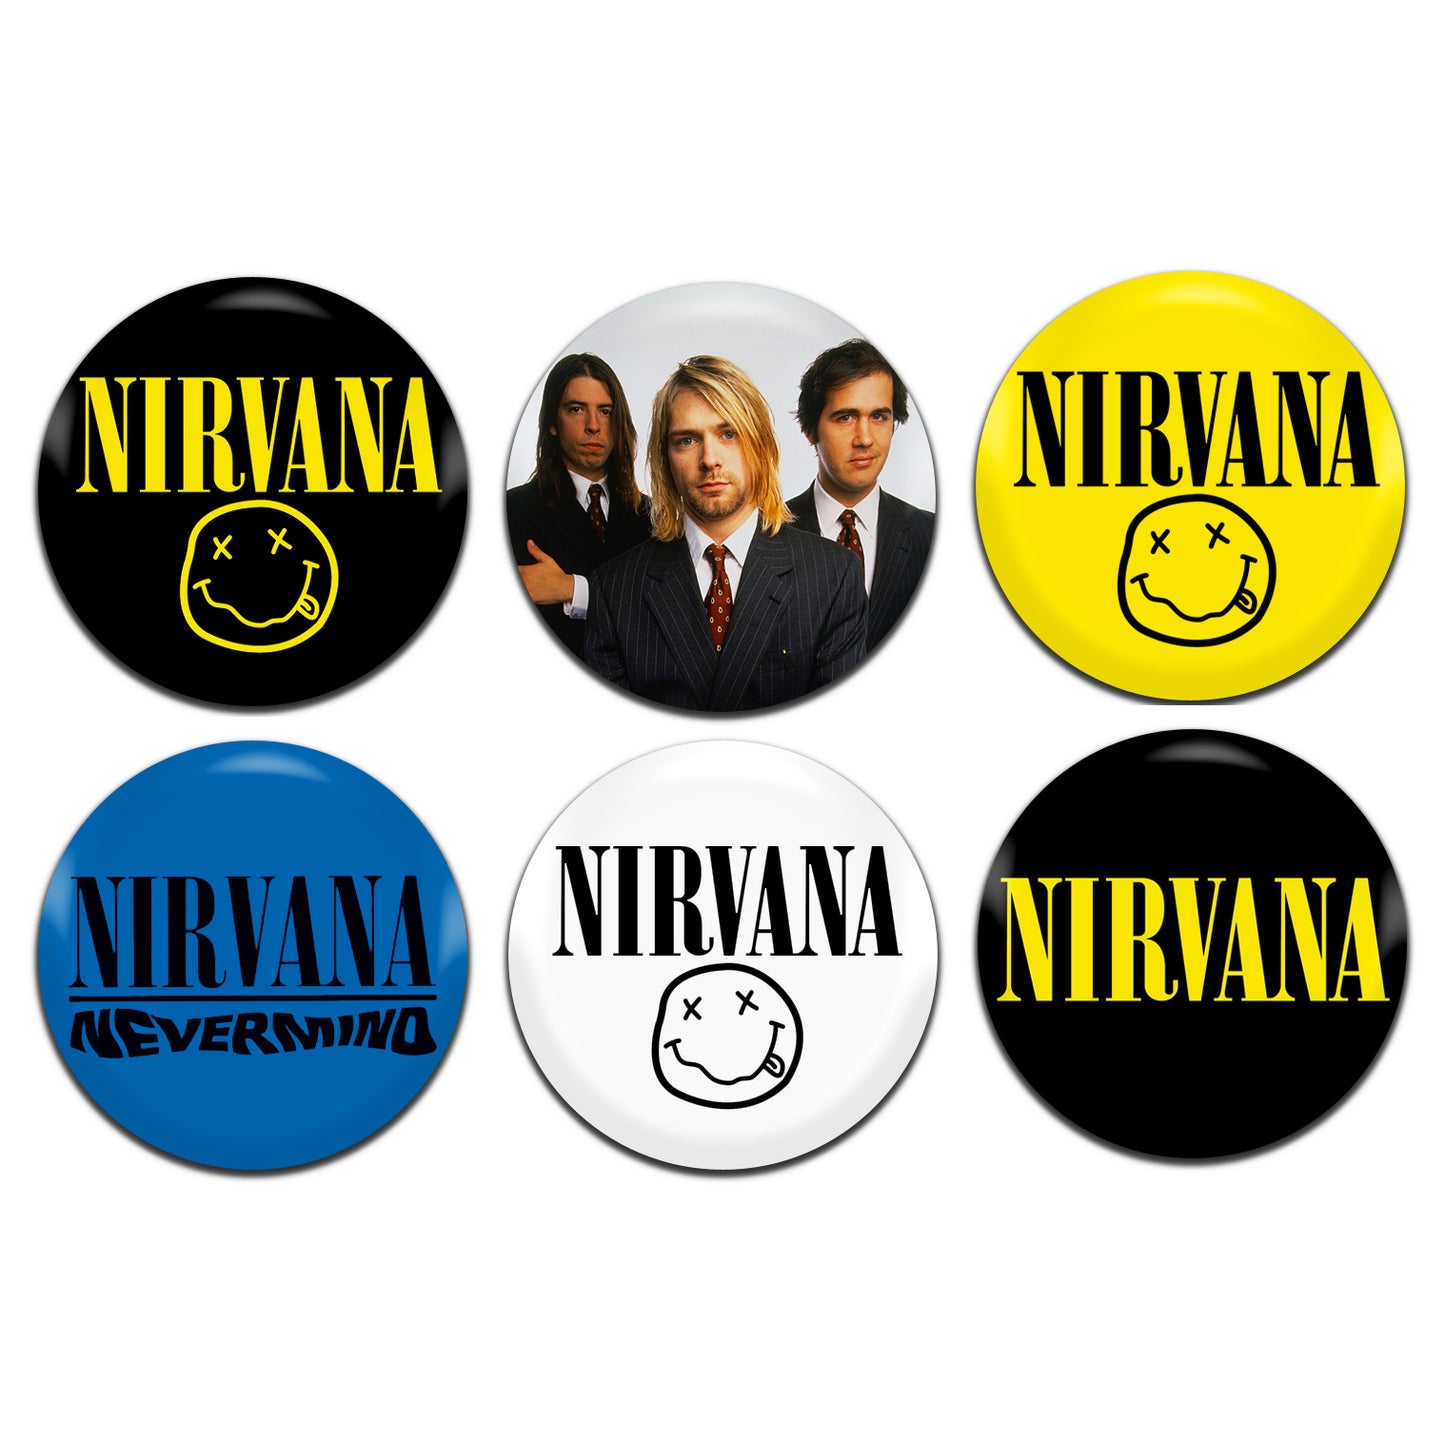 Nirvana Alternative Rock Grunge 90's 25mm / 1 Inch D-Pin Button Badges (6x Set)